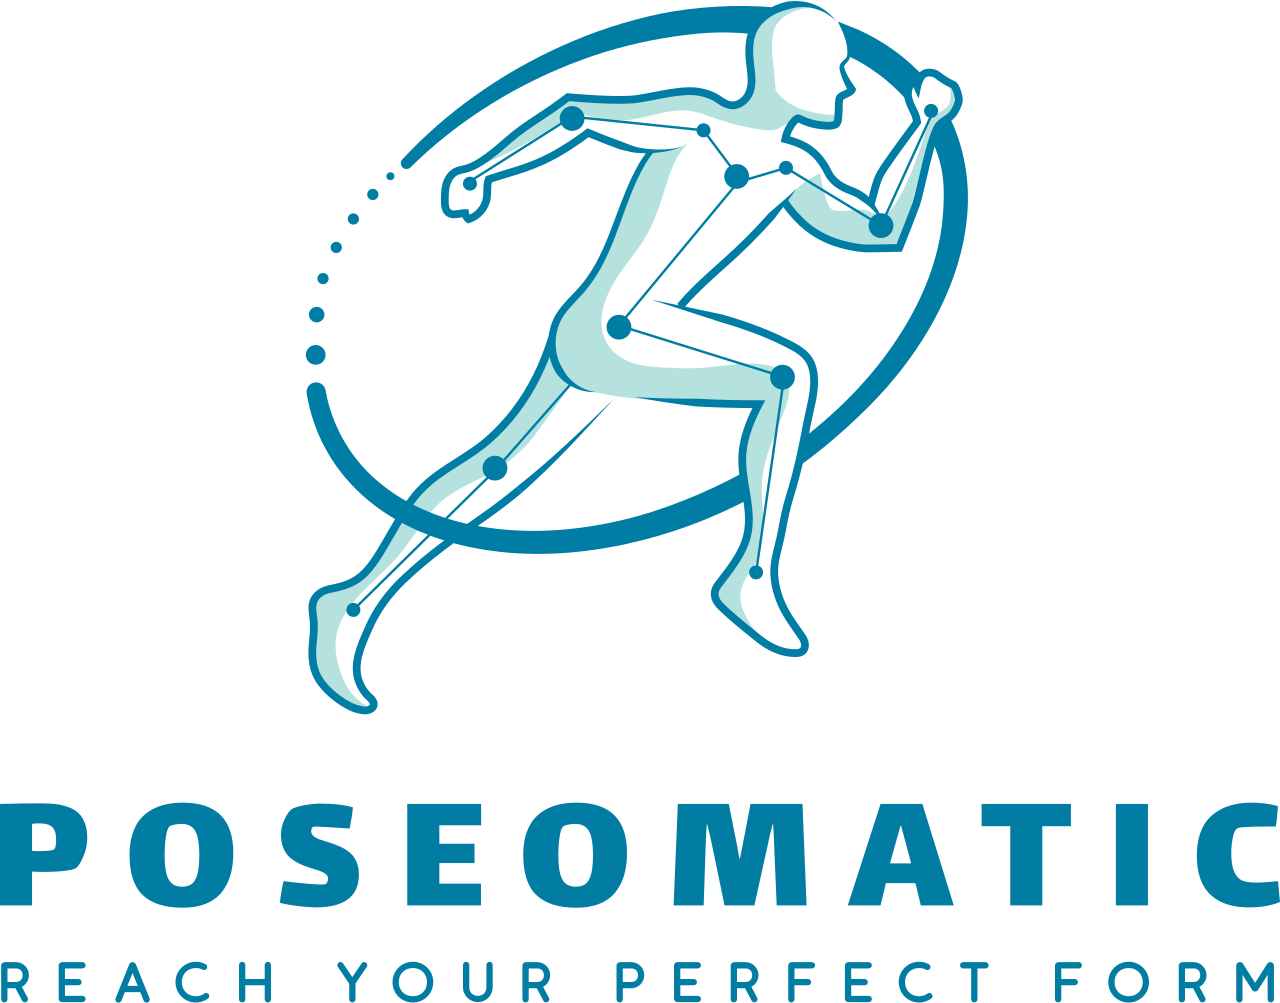 Poseomatic's web page